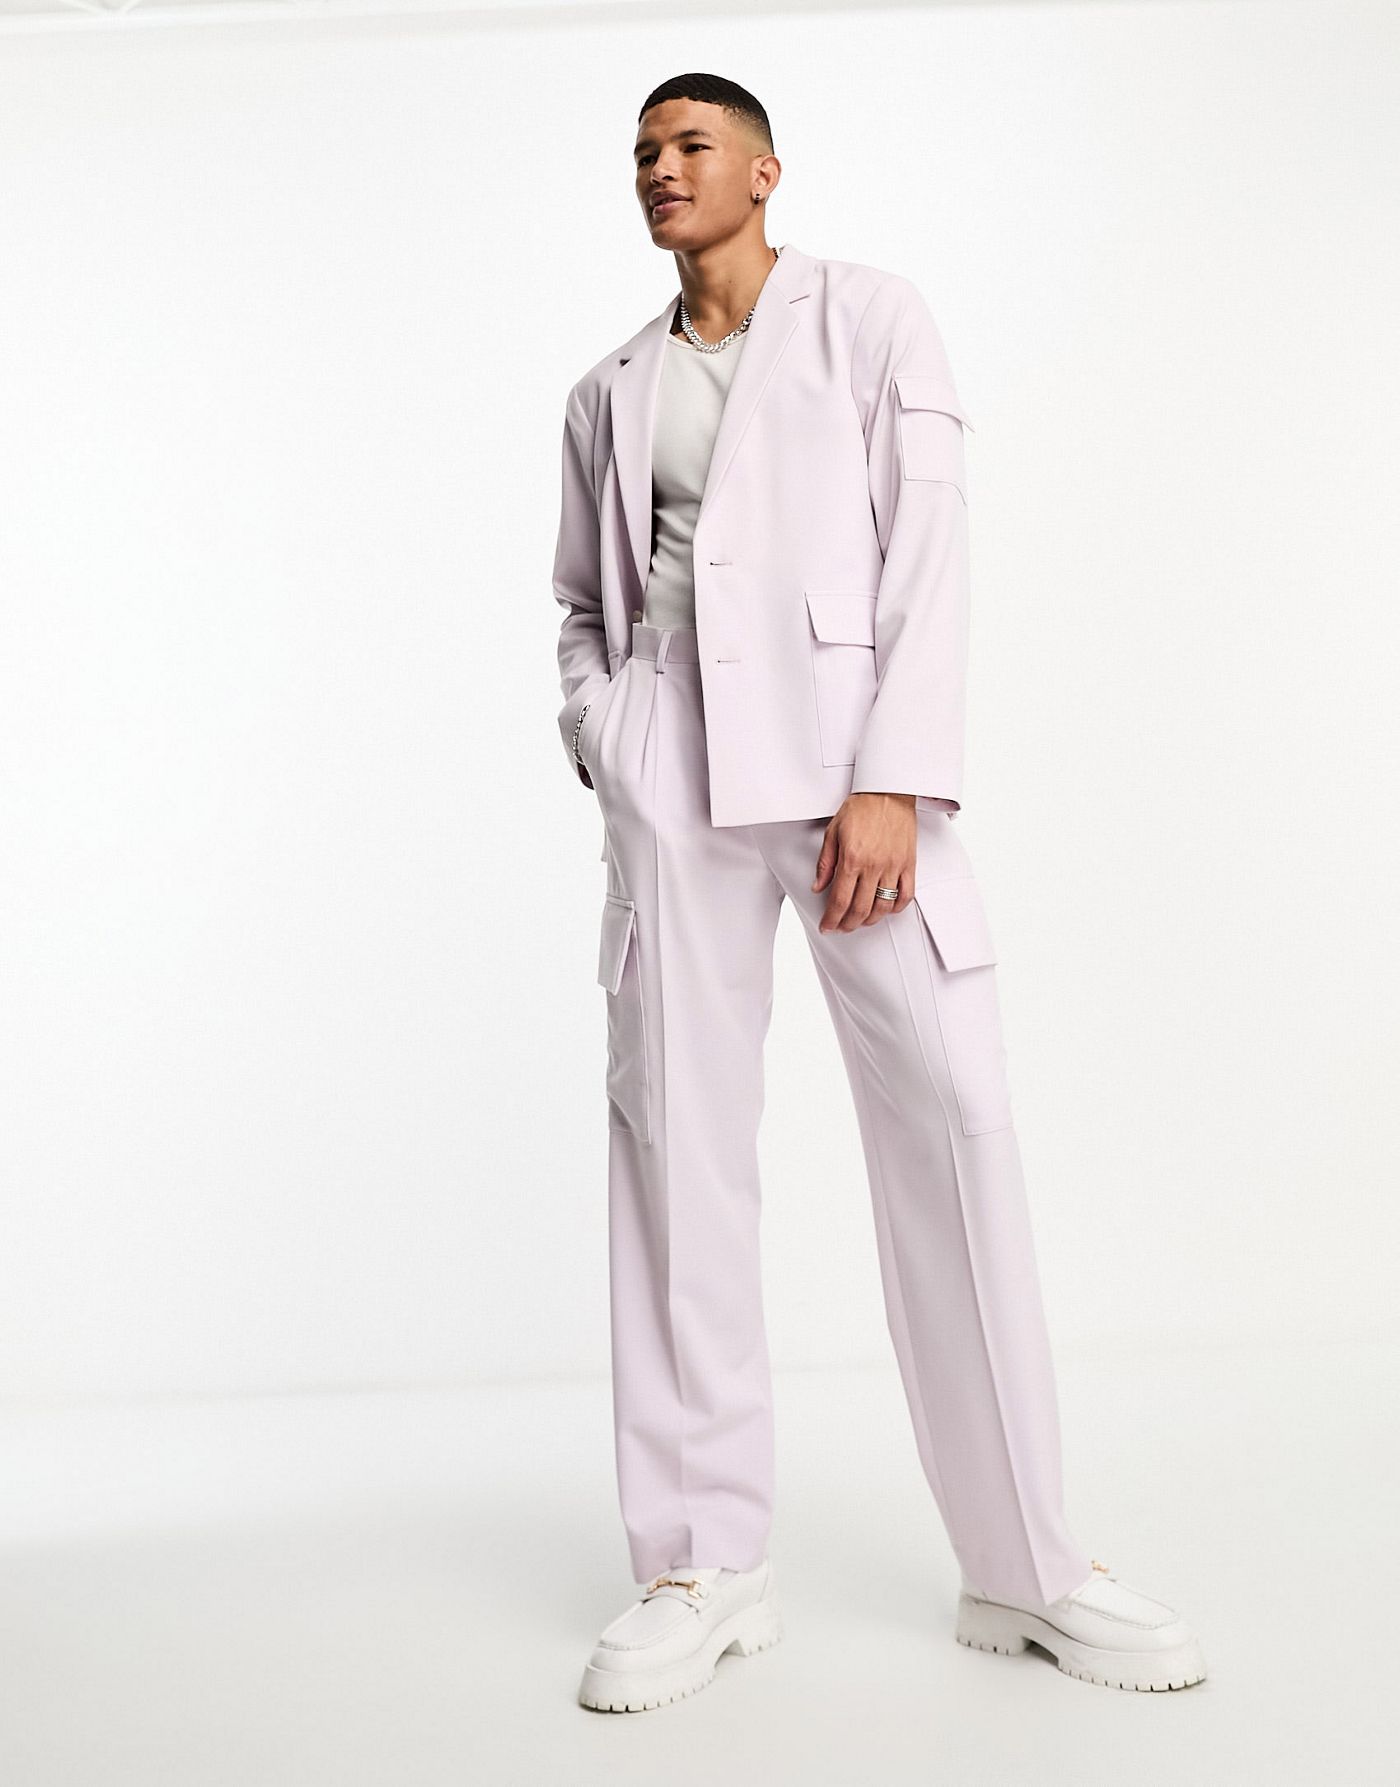 ASOS DESIGN oversized suit jacket in pale pink